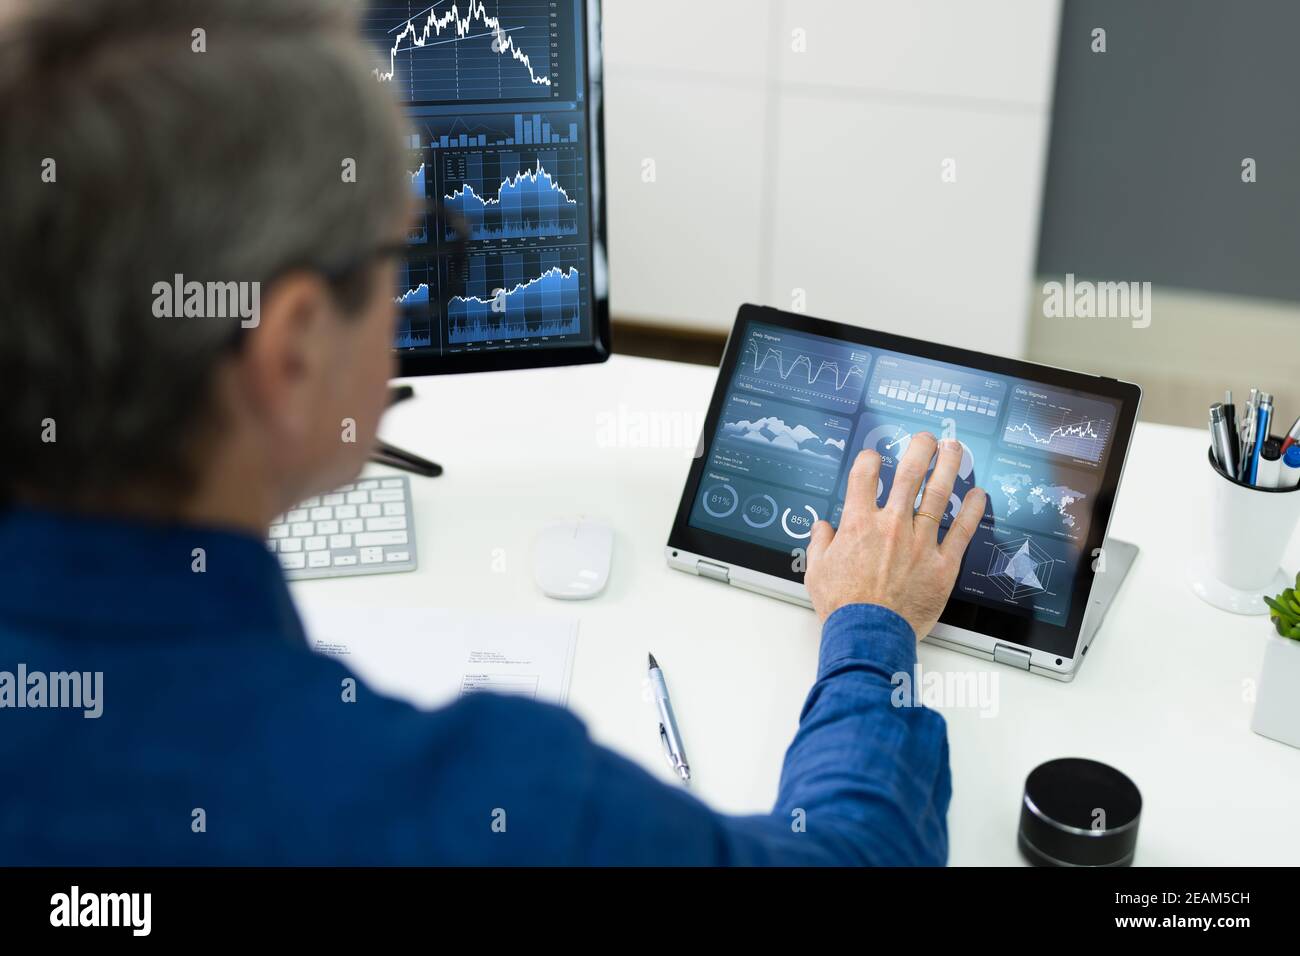 KPI Analytics Business Data Dashboard Technology Stock Photo